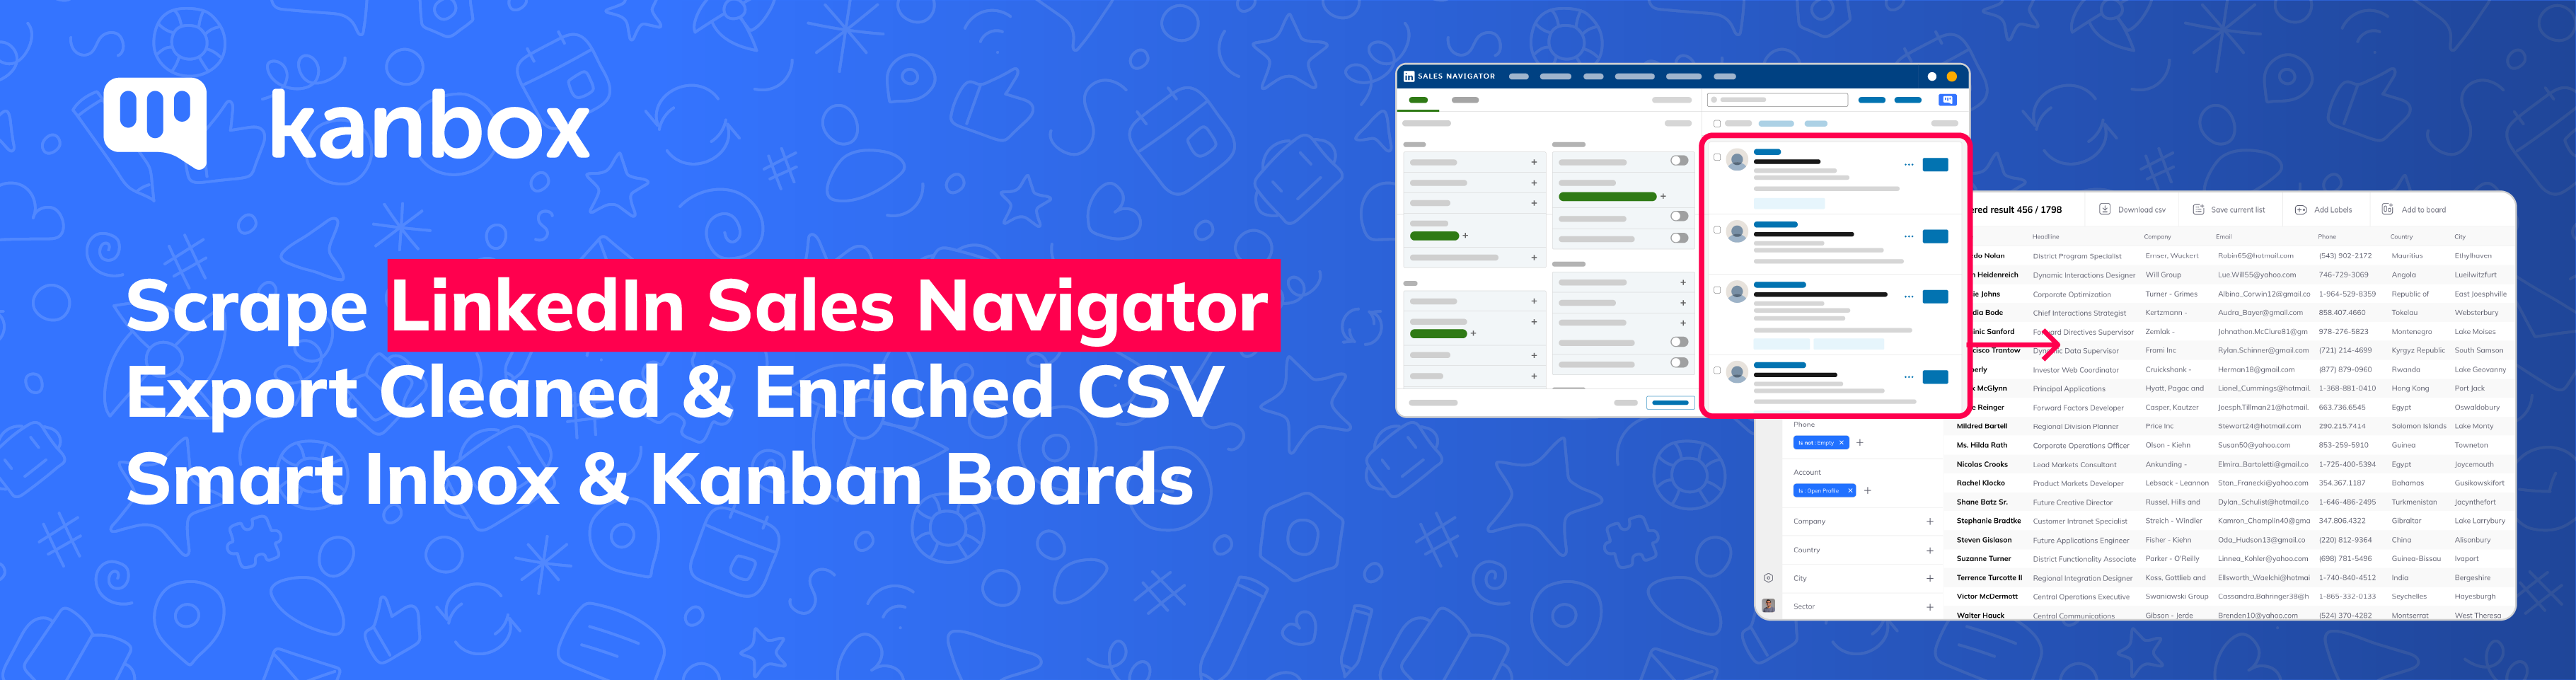 Review Kanbox: Linkedln Sales Navigator Scraper, Smart Inbox extension - Appvizer